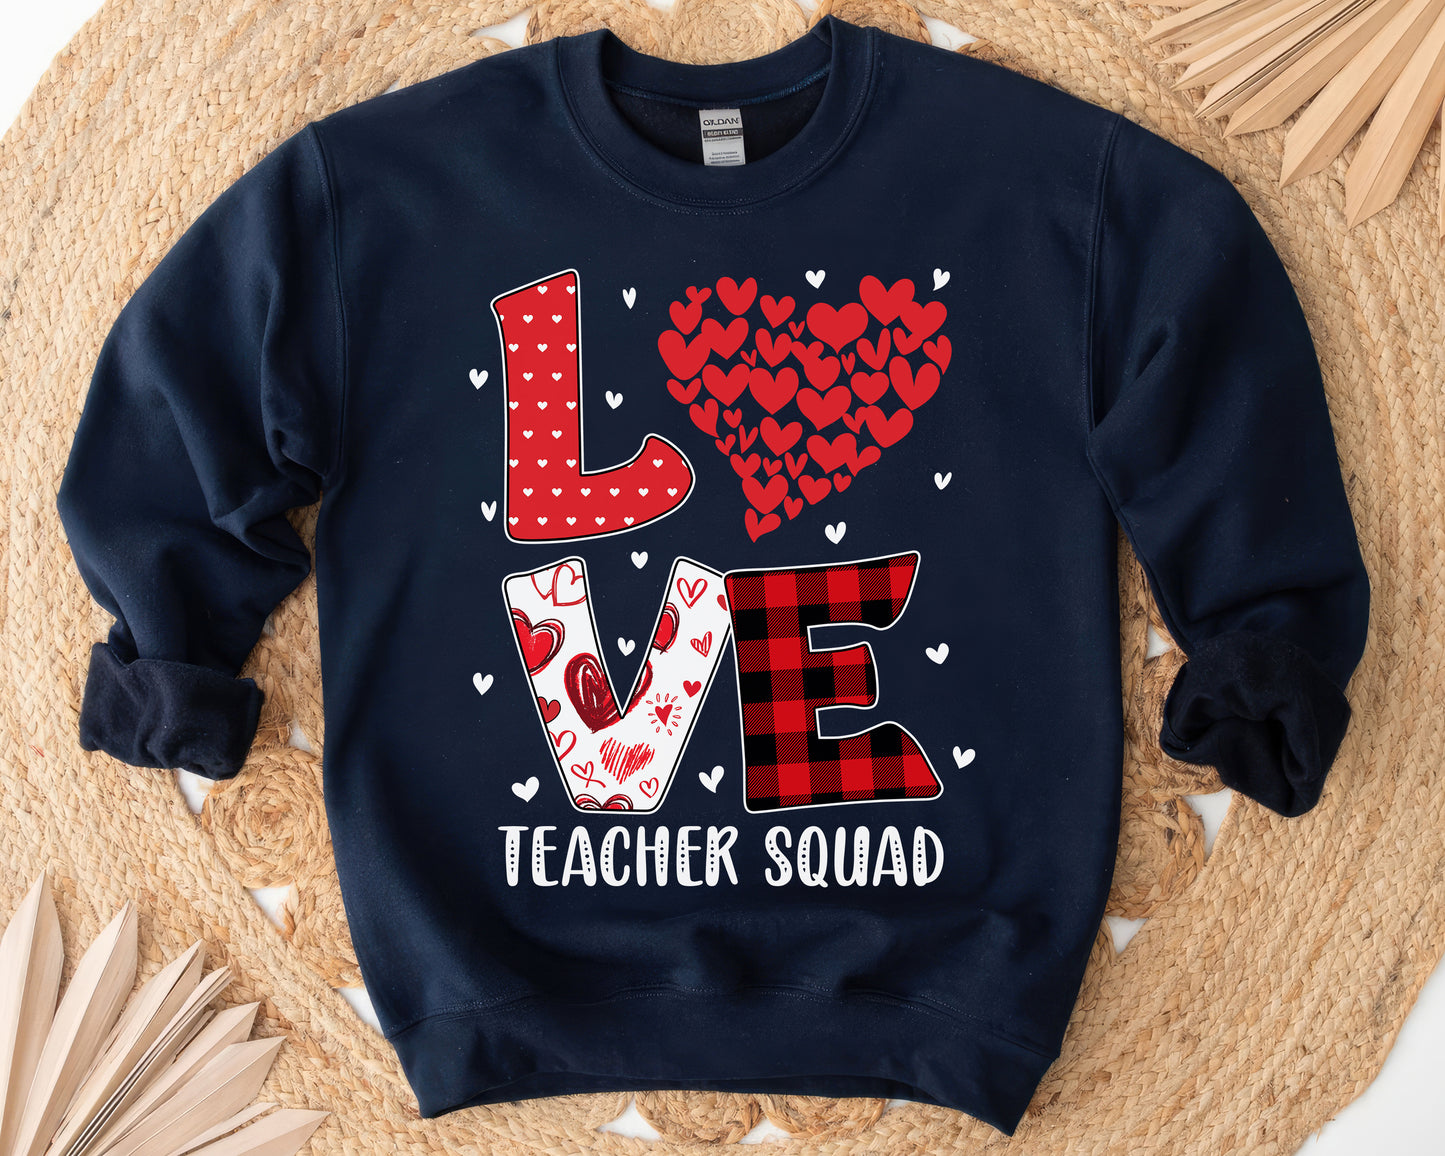 Tee Art Online - Valentine Red Hearts Within Heart LOVE Teacher Personalized Sweatshirt | Valentine's Day Kawaii Cute Gifts | Buffalo Plaid Pattern Design - Navy